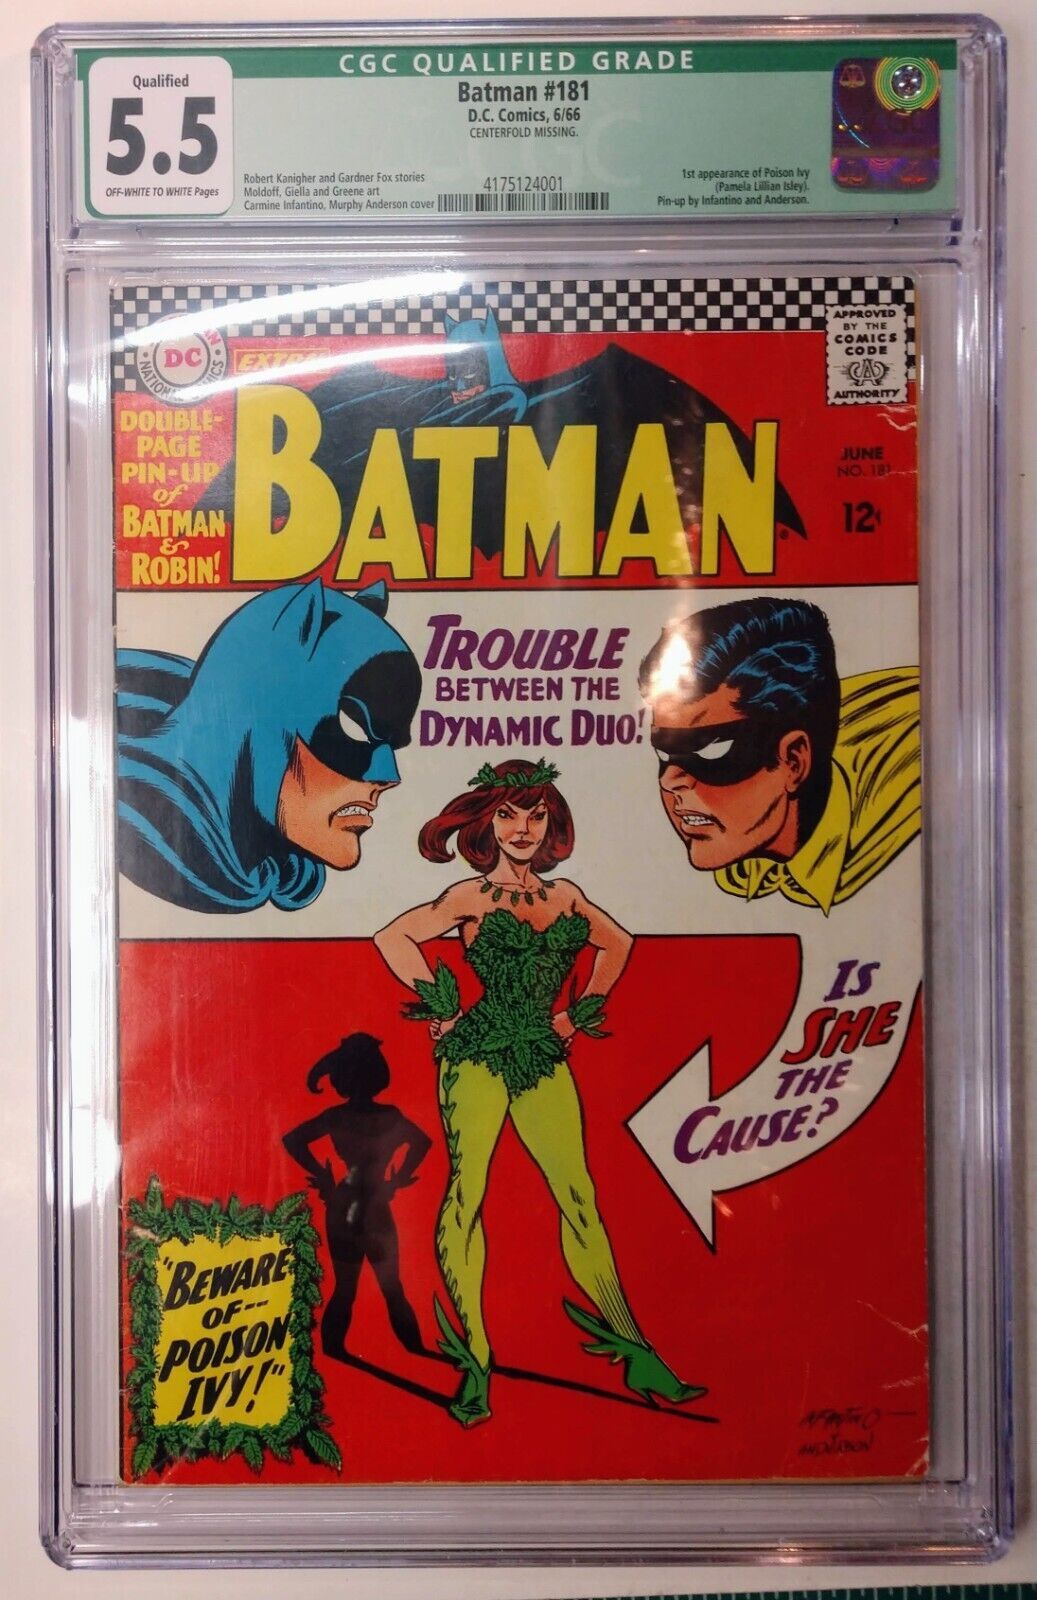 Batman #181 1st app of Poison Ivy (Missing Centerfold) | Comic Books -  Silver Age, DC Comics, Batman, Superhero / HipComic